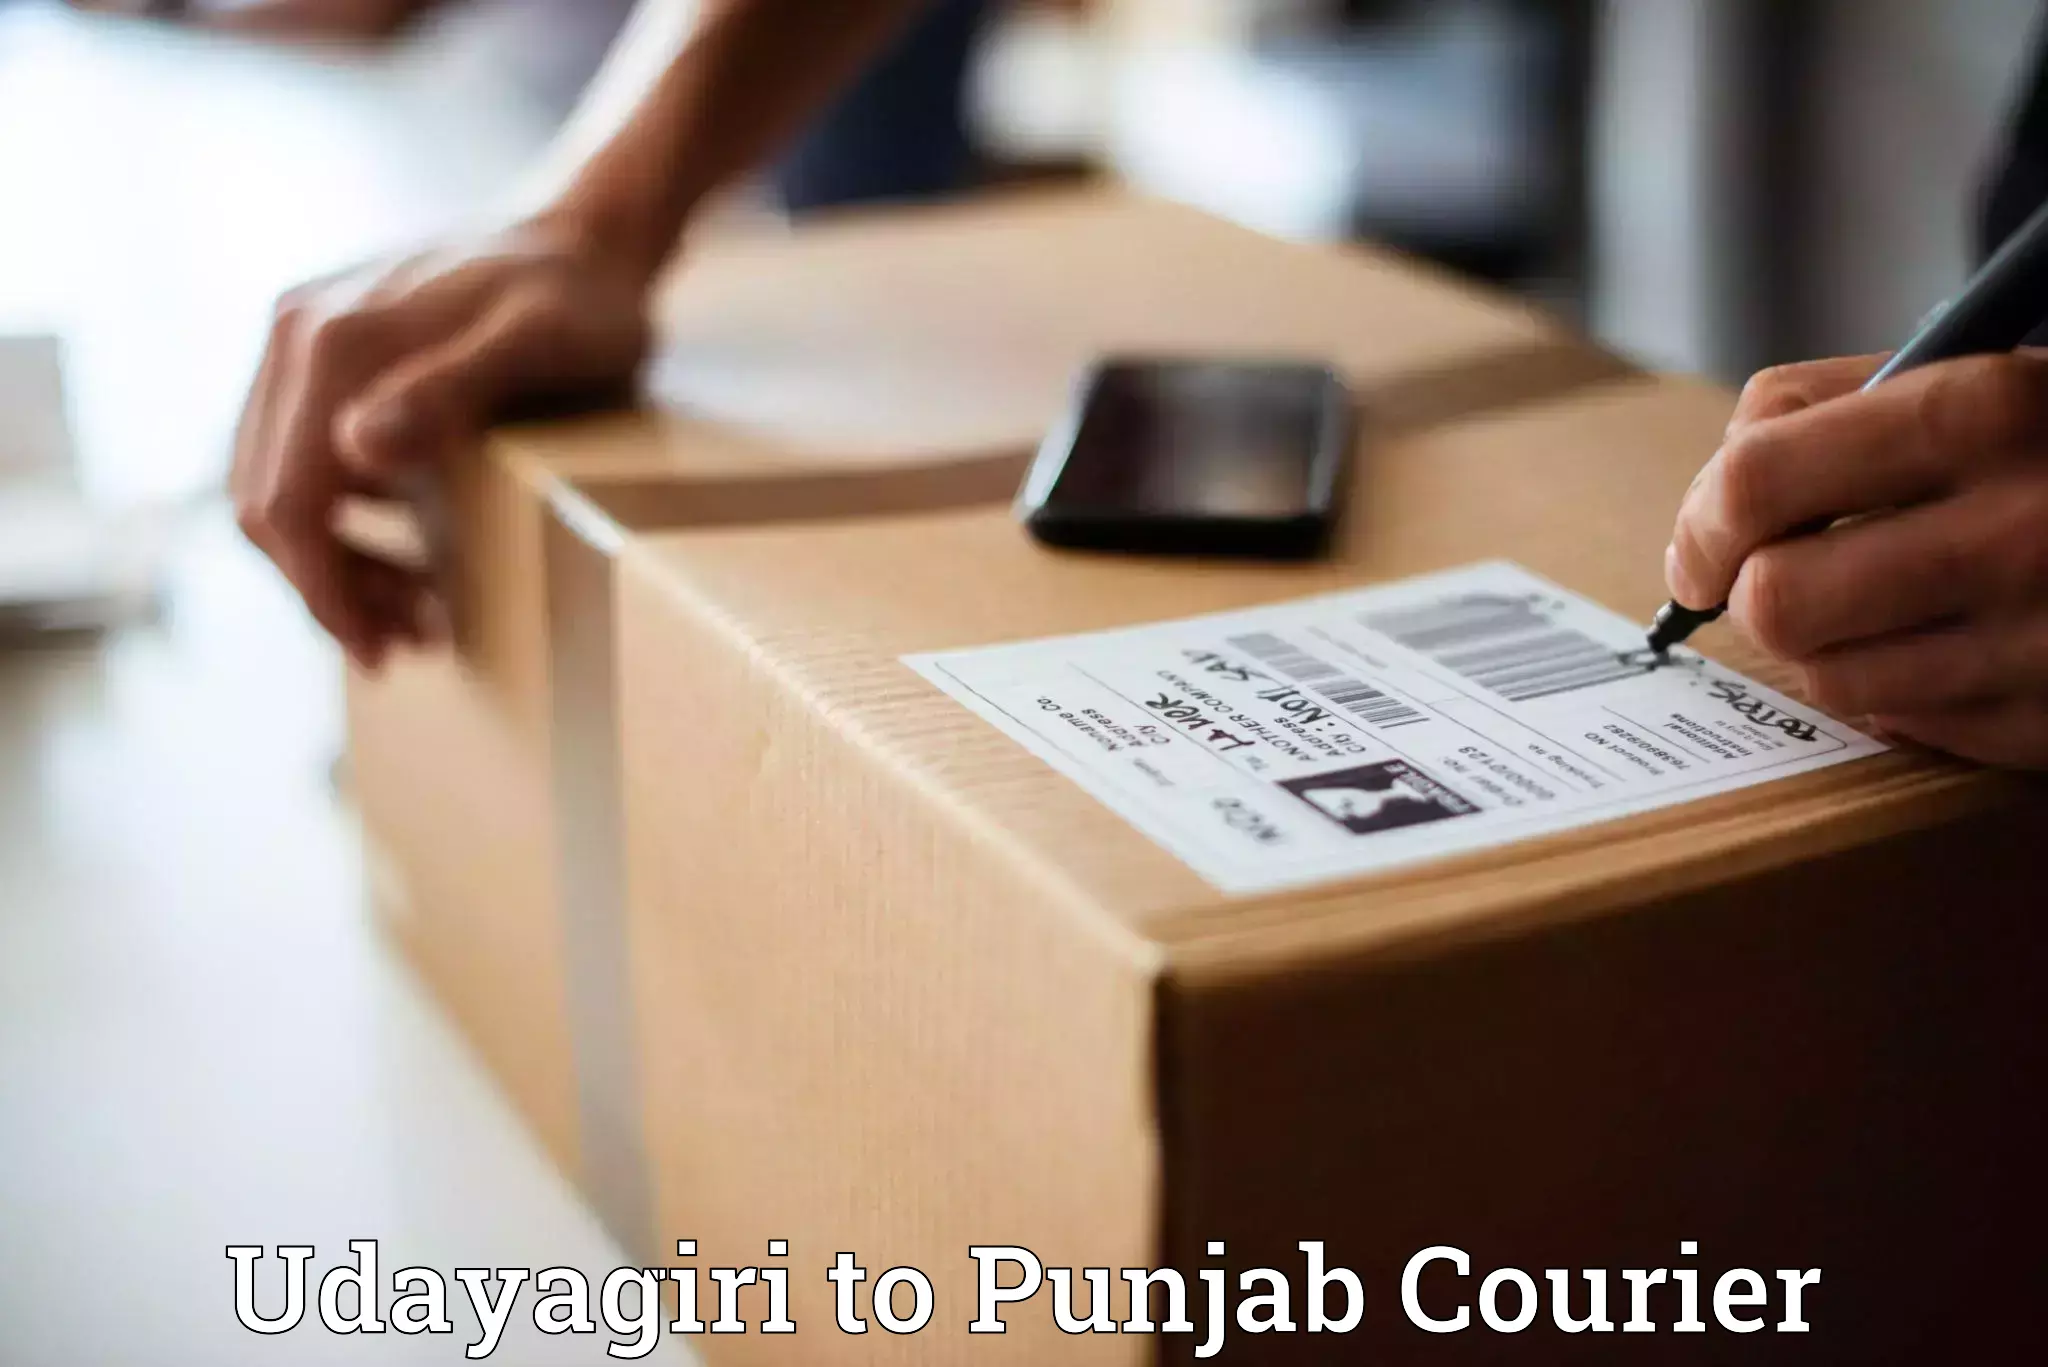 Courier service comparison in Udayagiri to Punjab